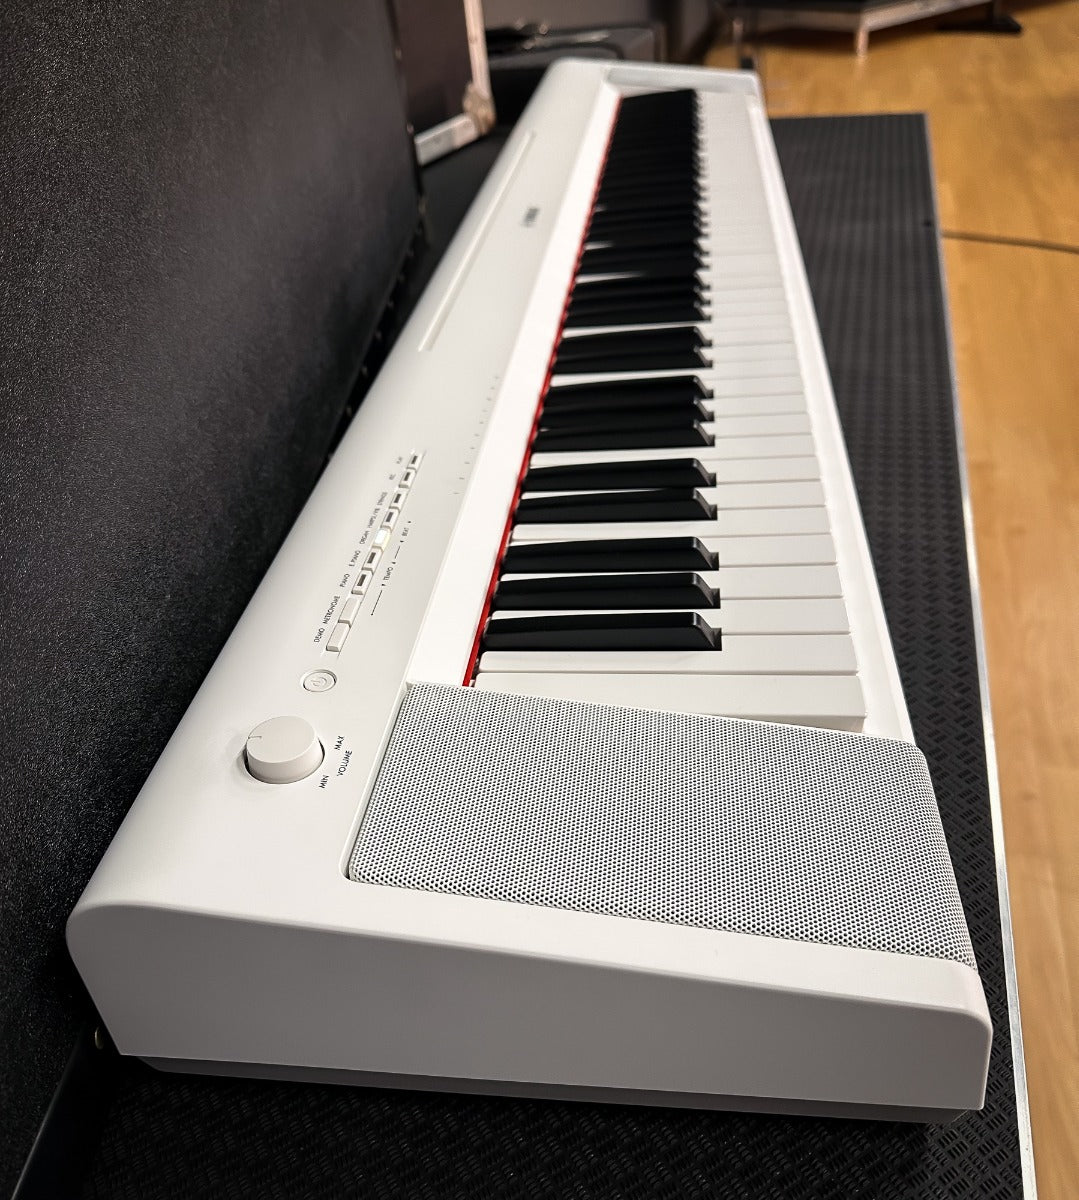 Yamaha Piaggero NP35 76-Key Portable Keyboard with Power Adapter - White, View 8